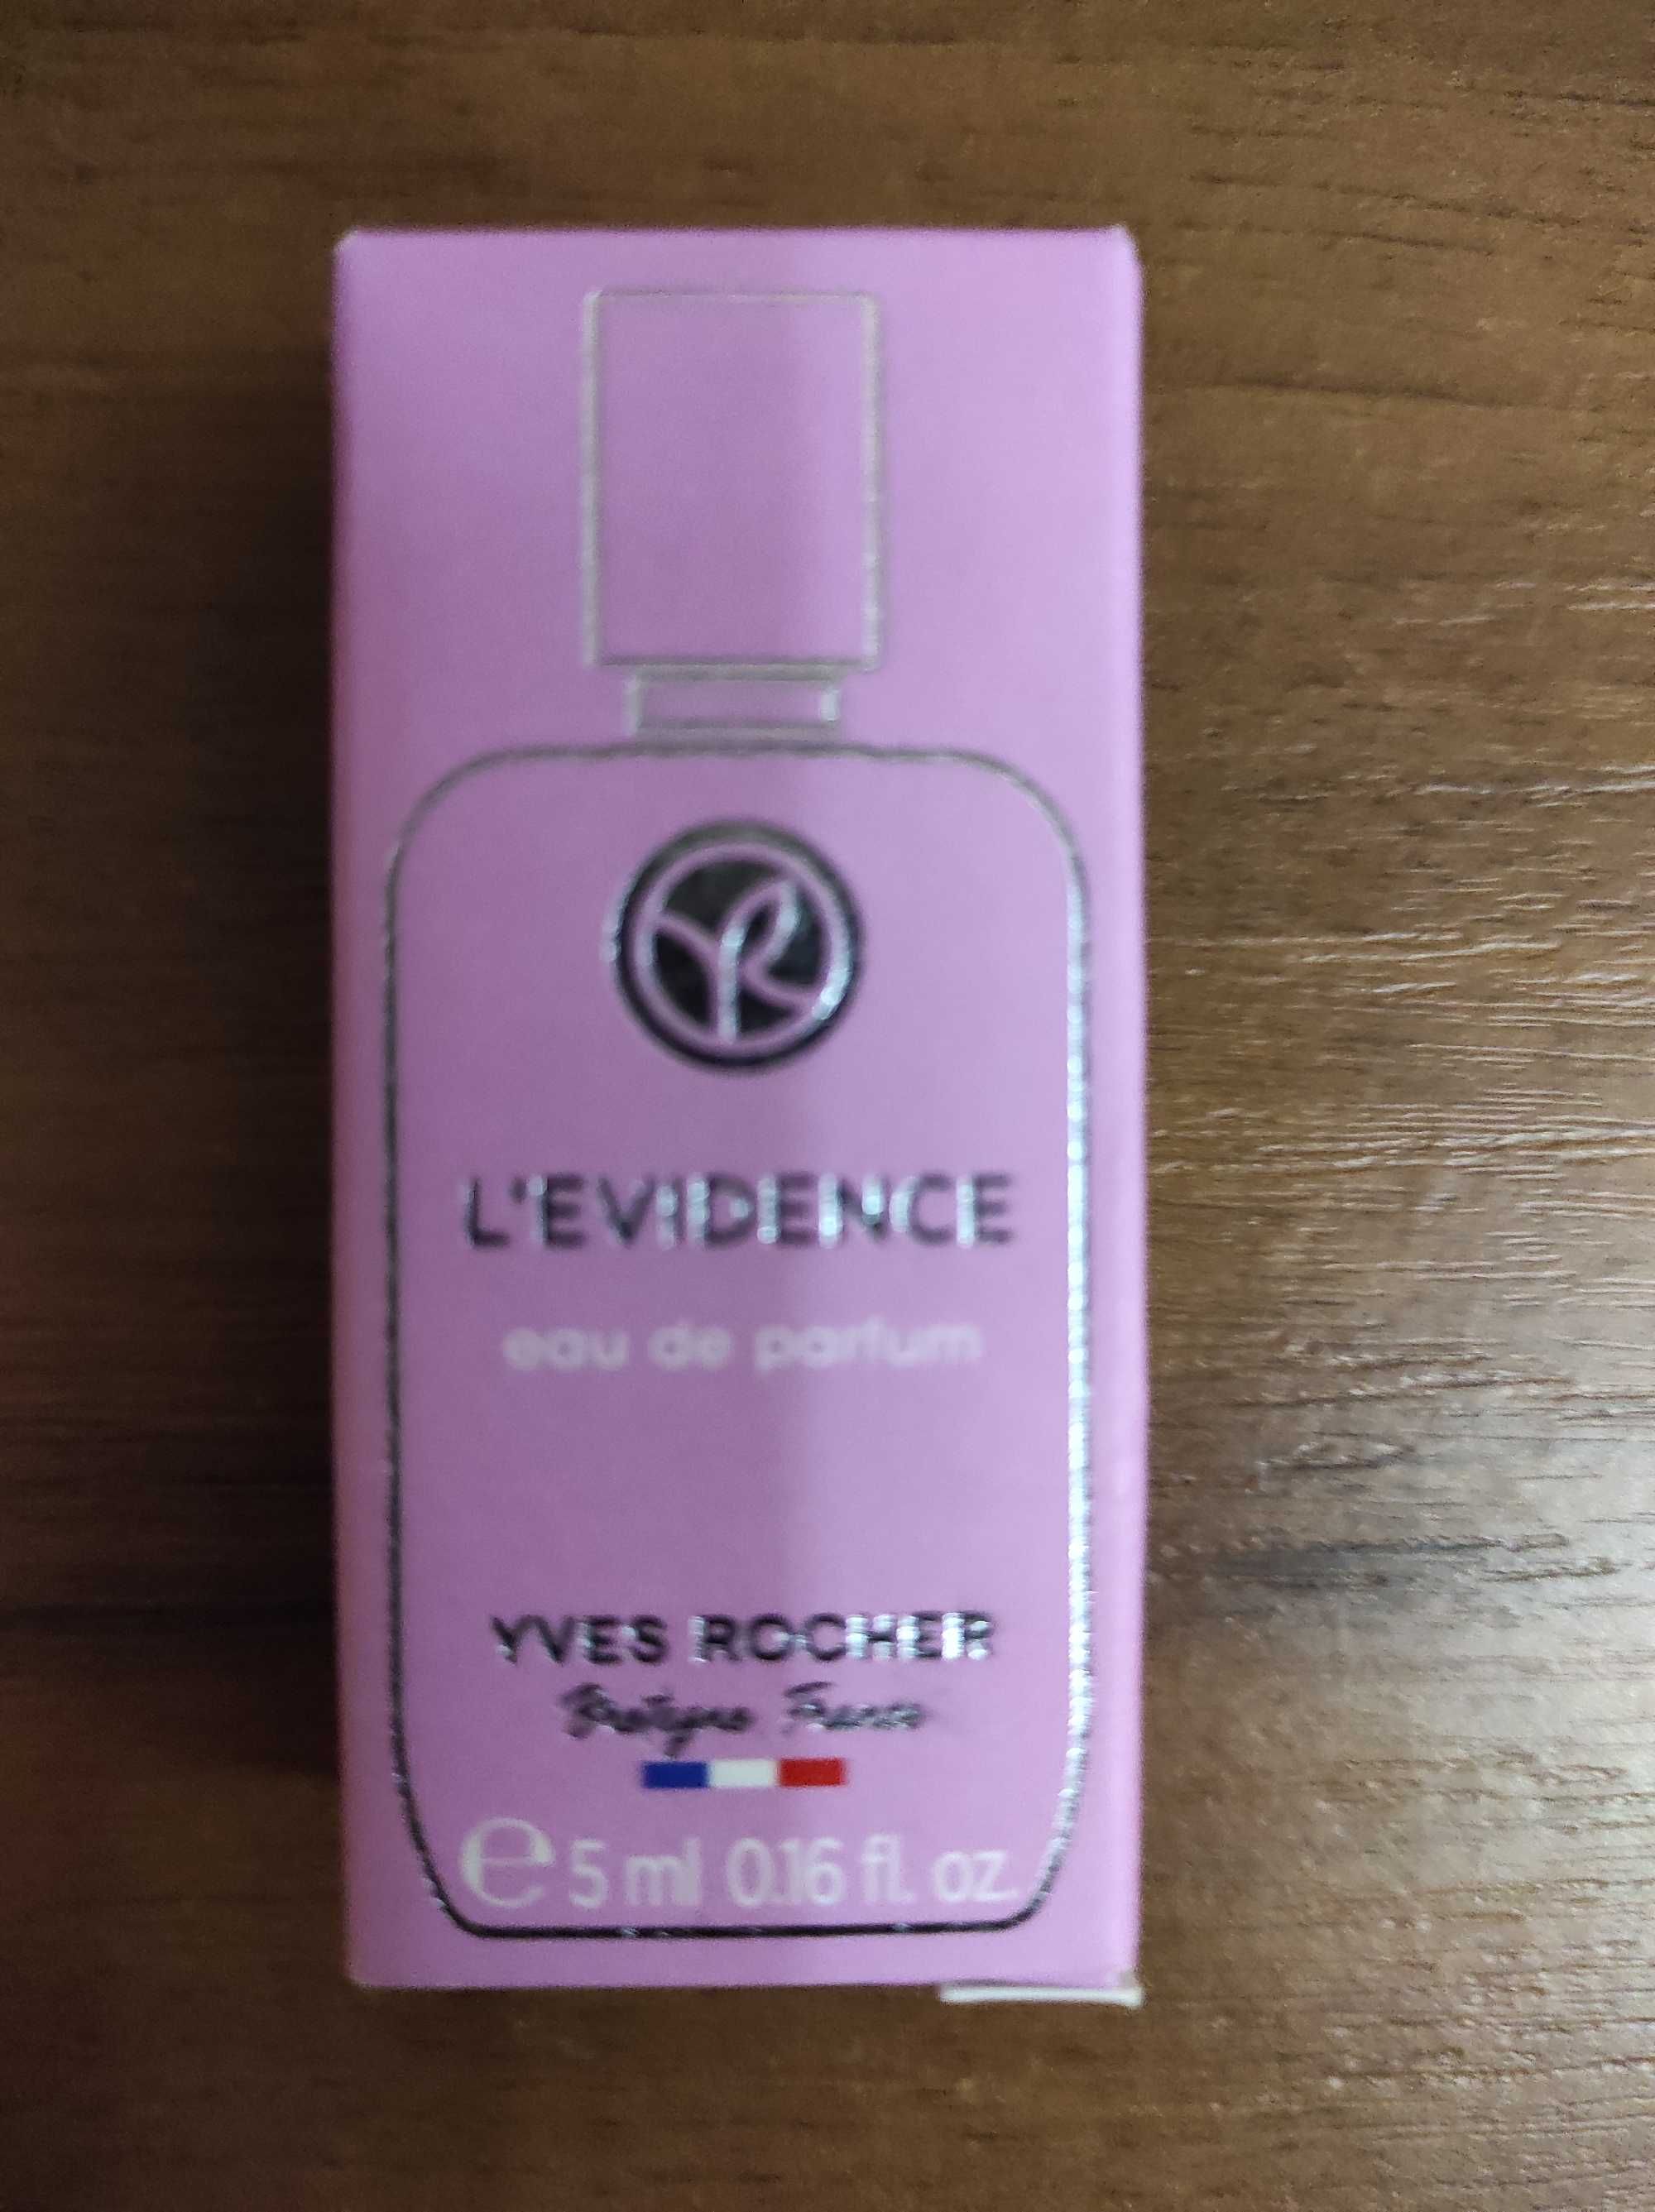 Жіночий парфум Evidence 5 мл Ів Роше Yves Rocher